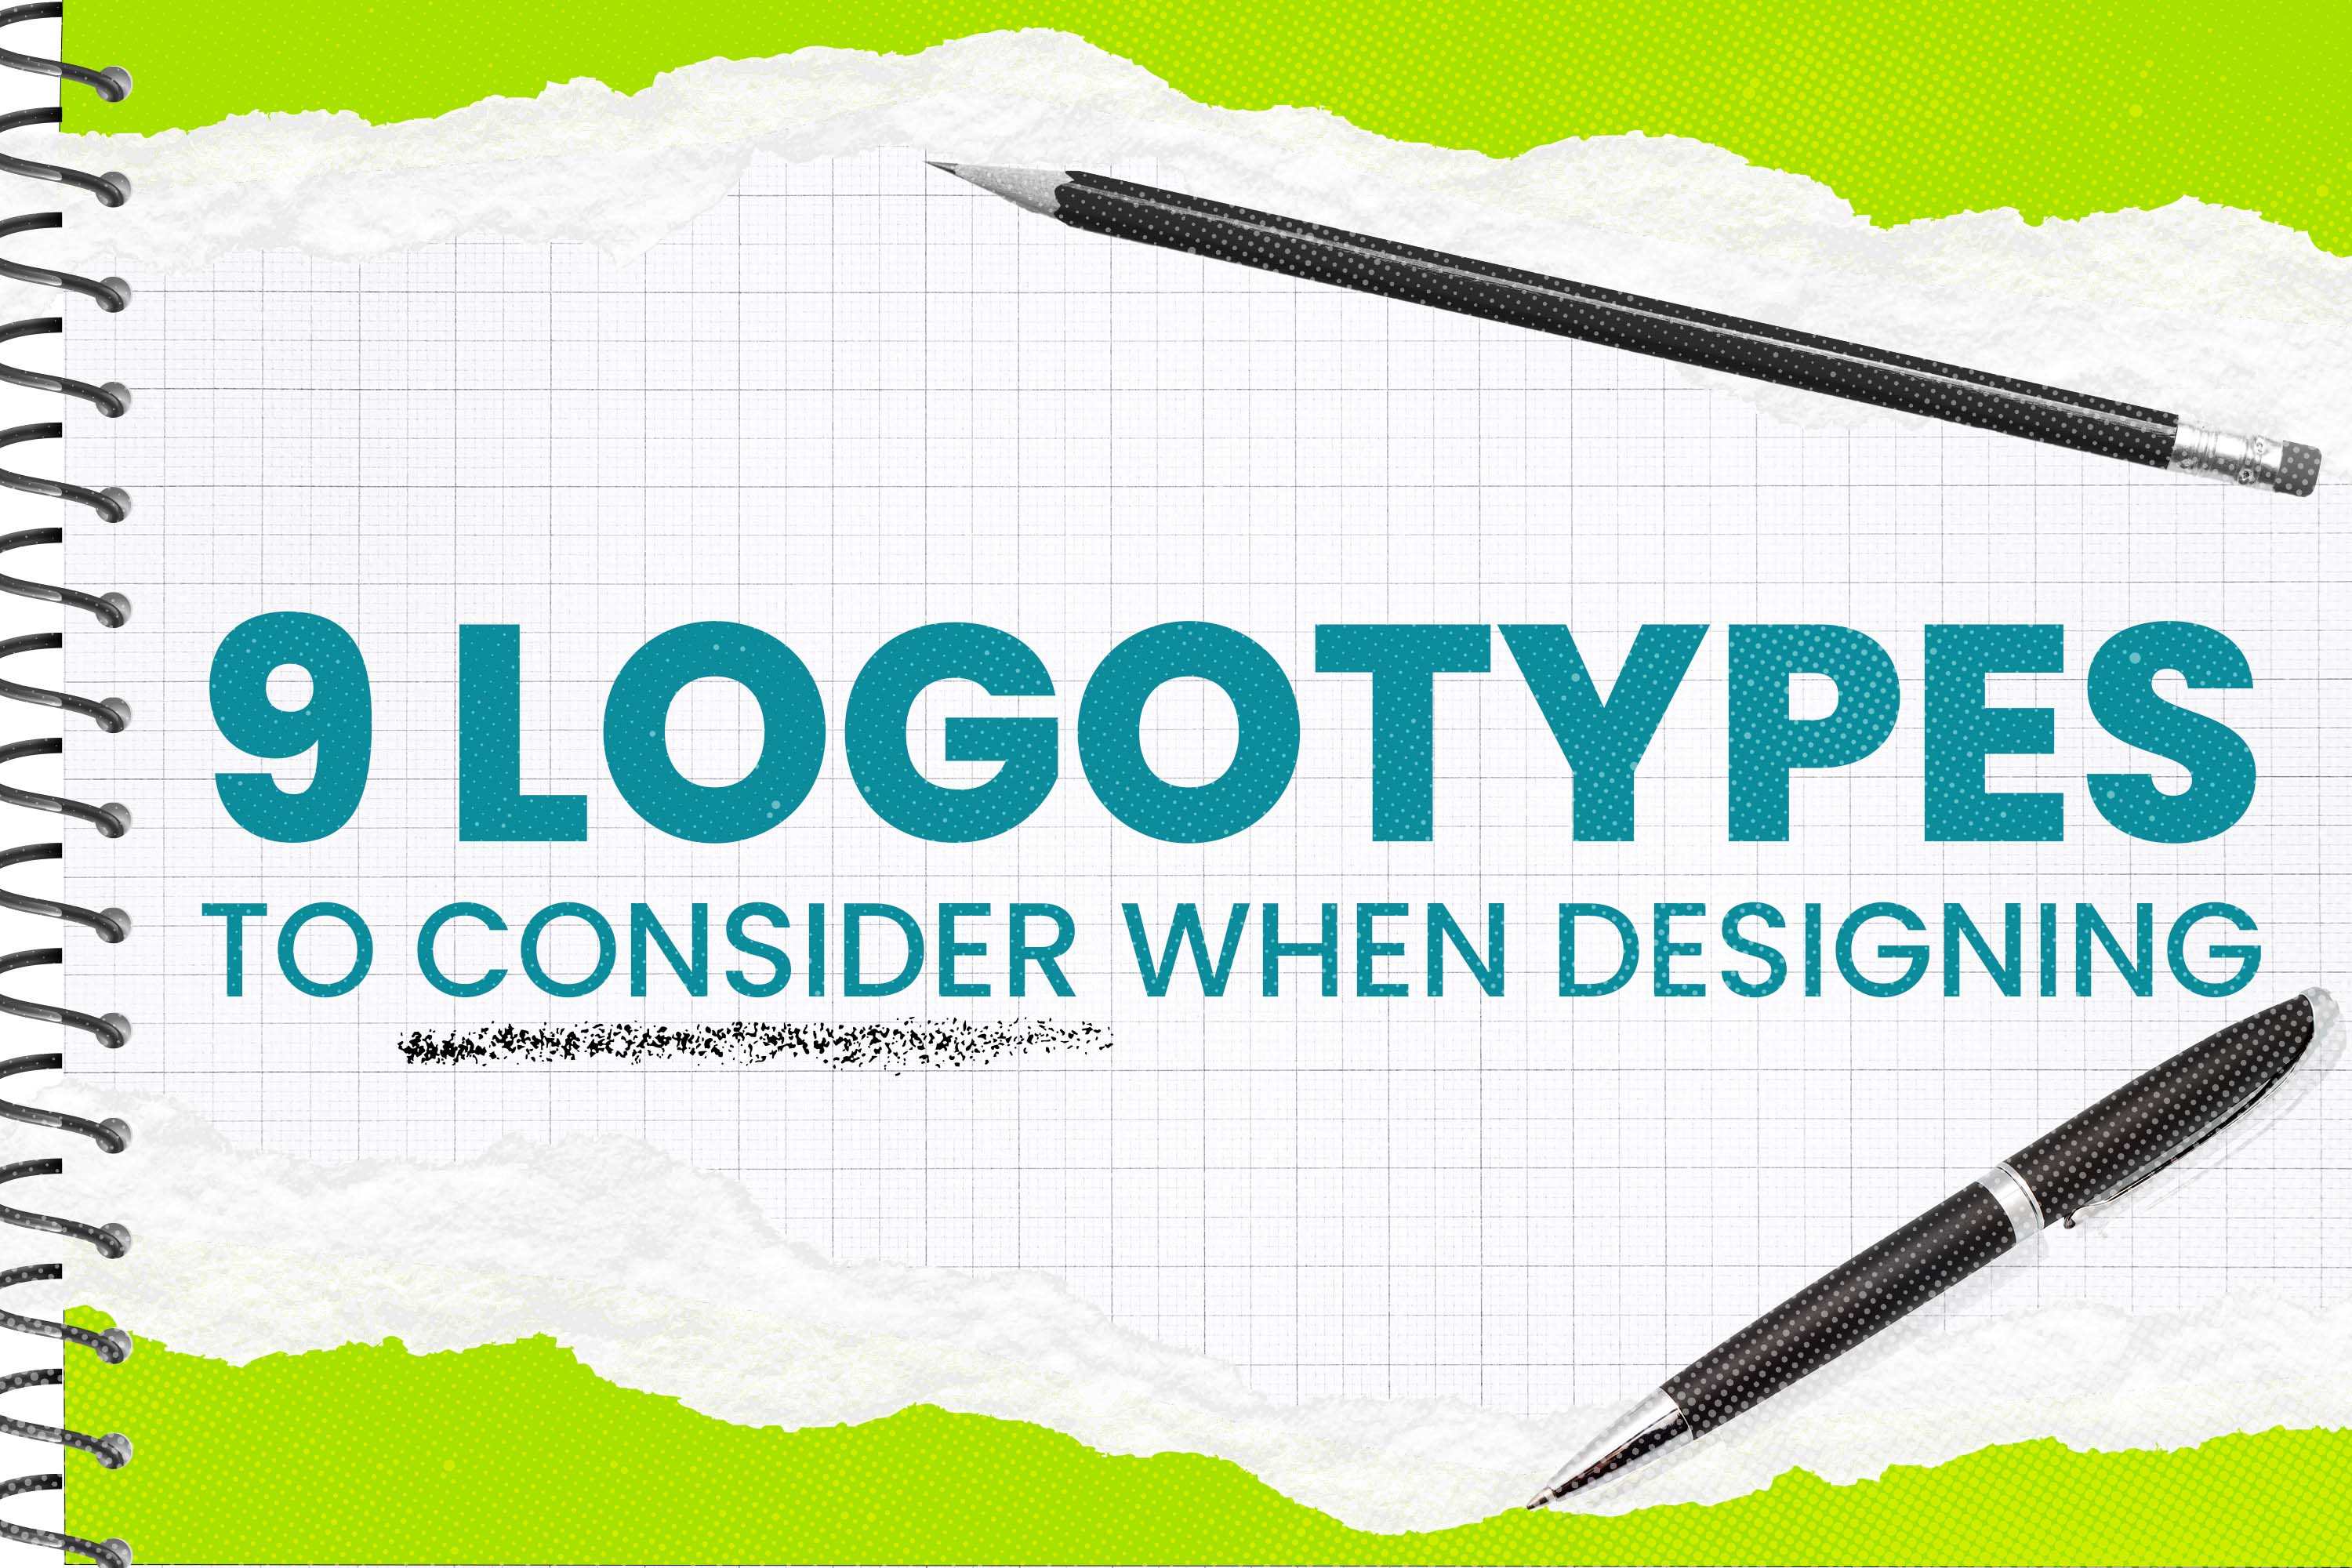 Design Logotypes To Consider